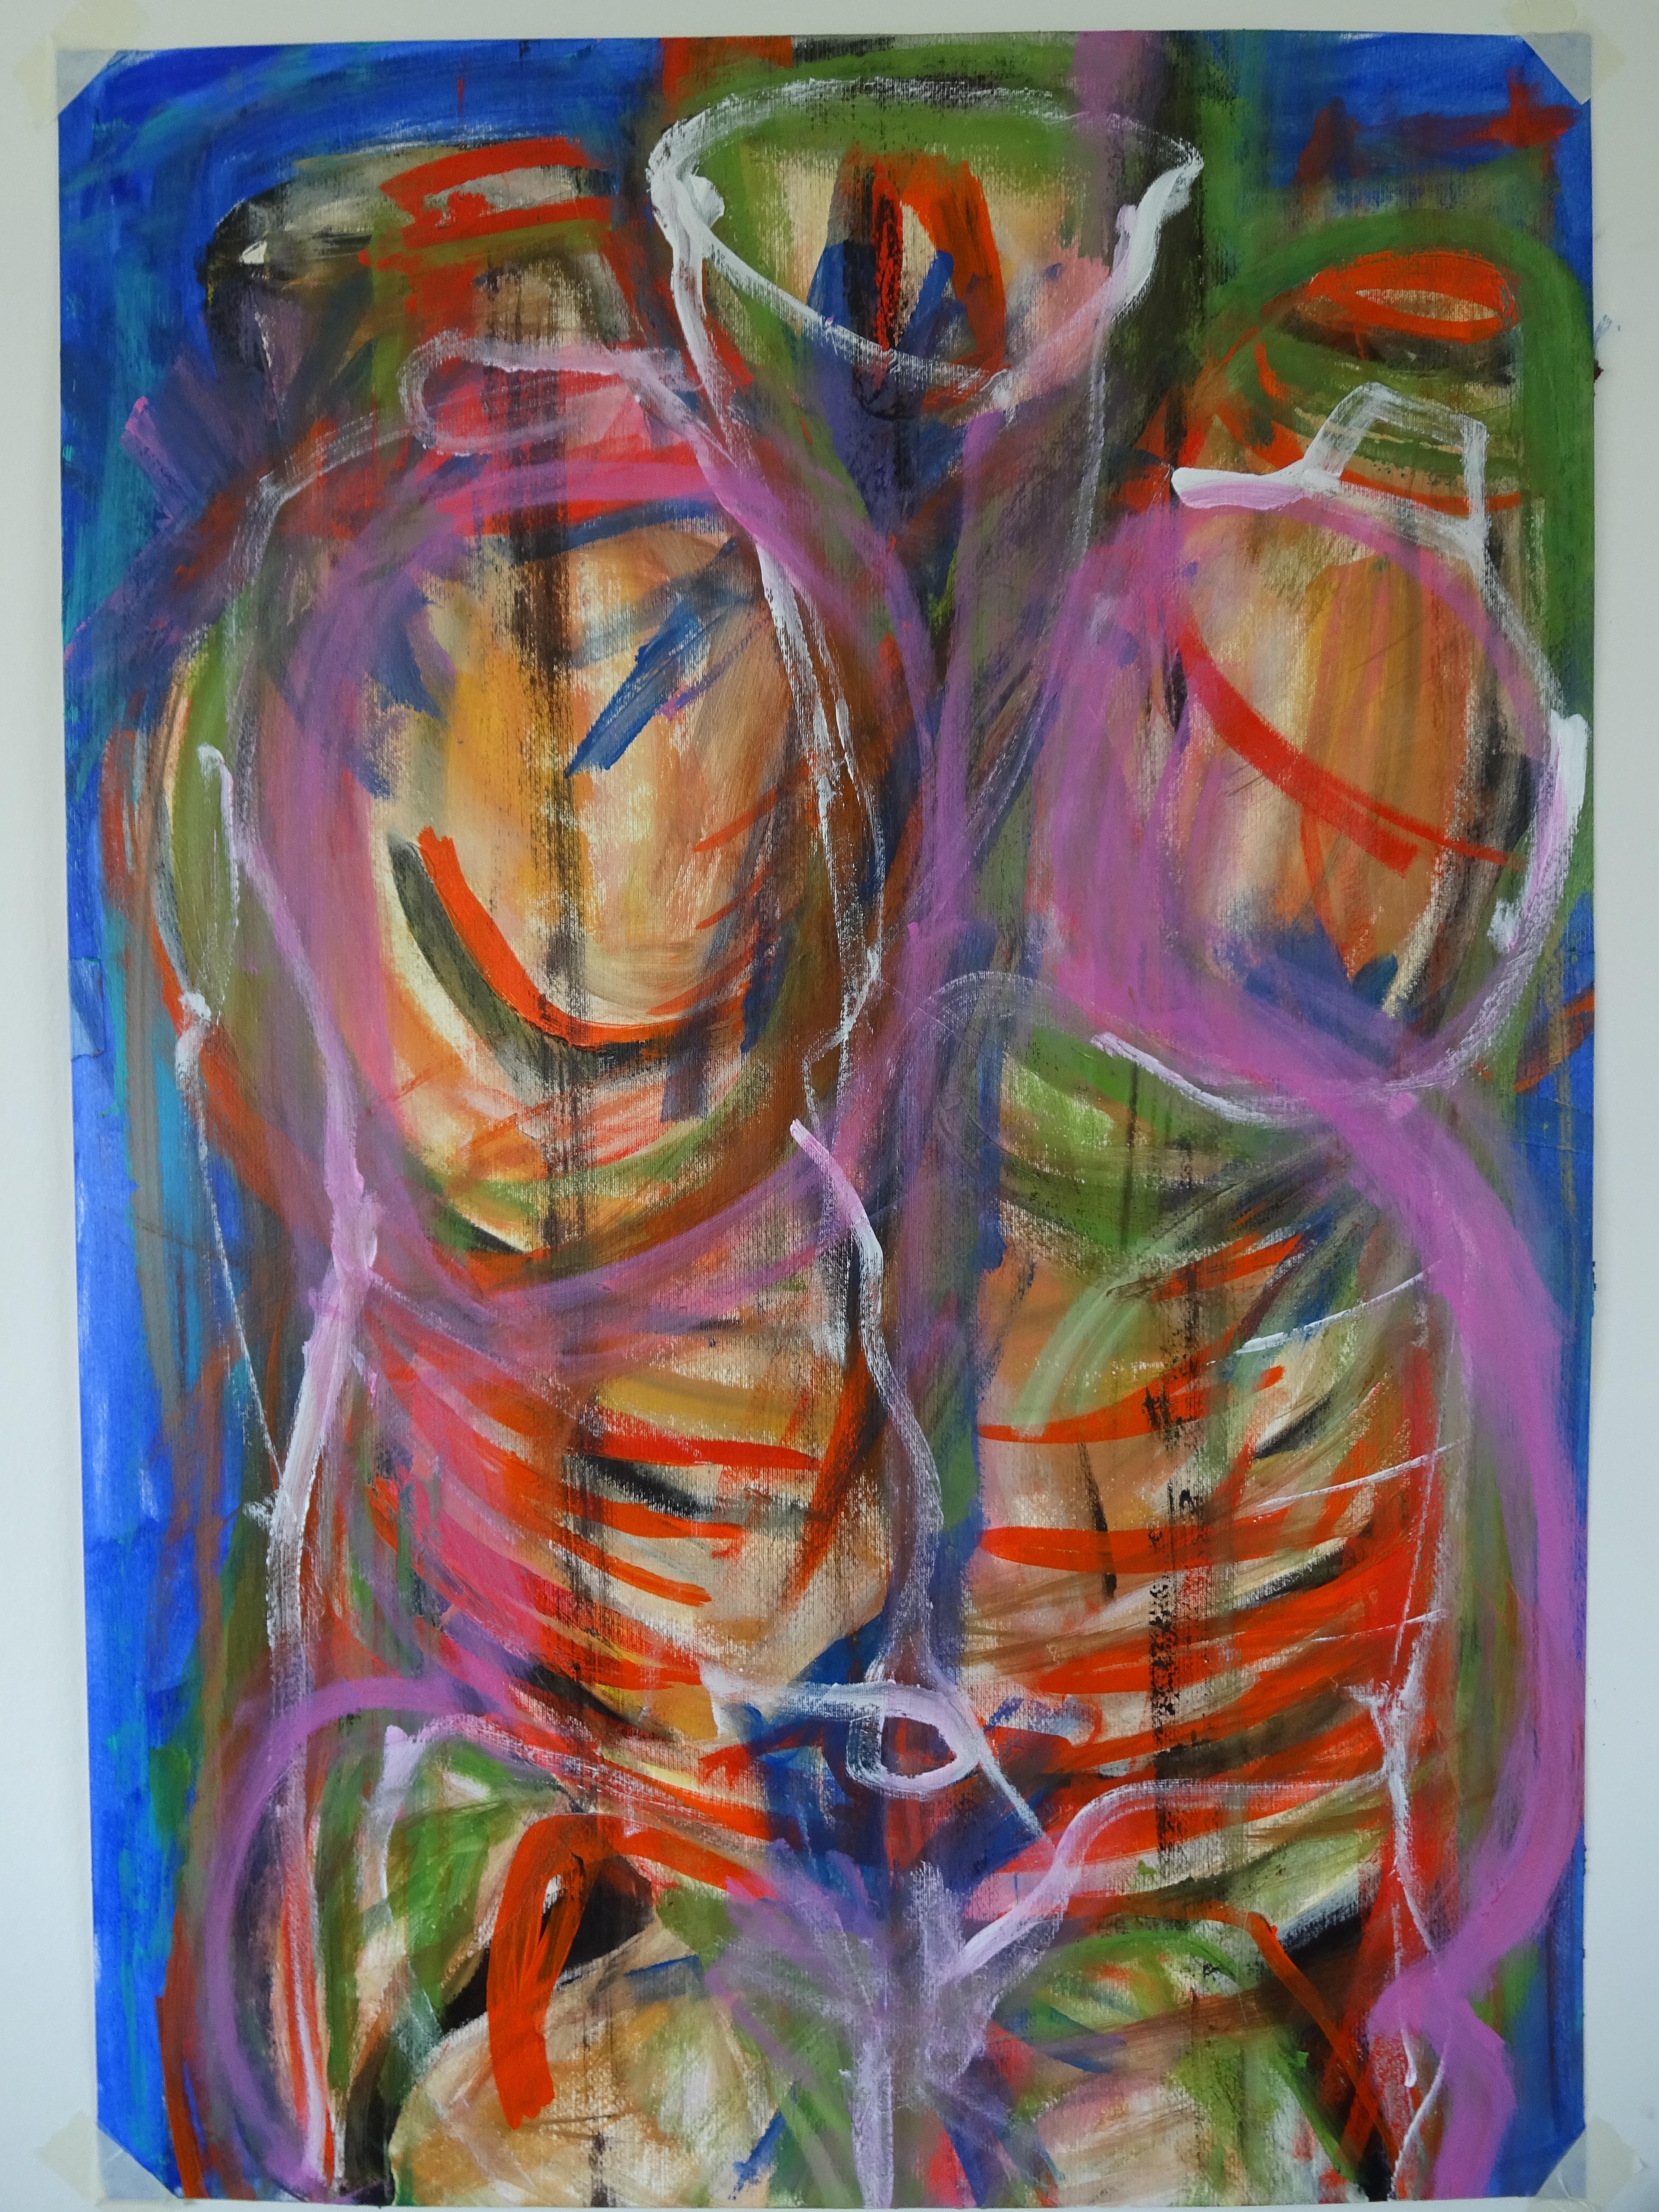 Clara Bolle, Metamorphine 3, 2019, 100 cm x 70 cm, acrylic paint on paper